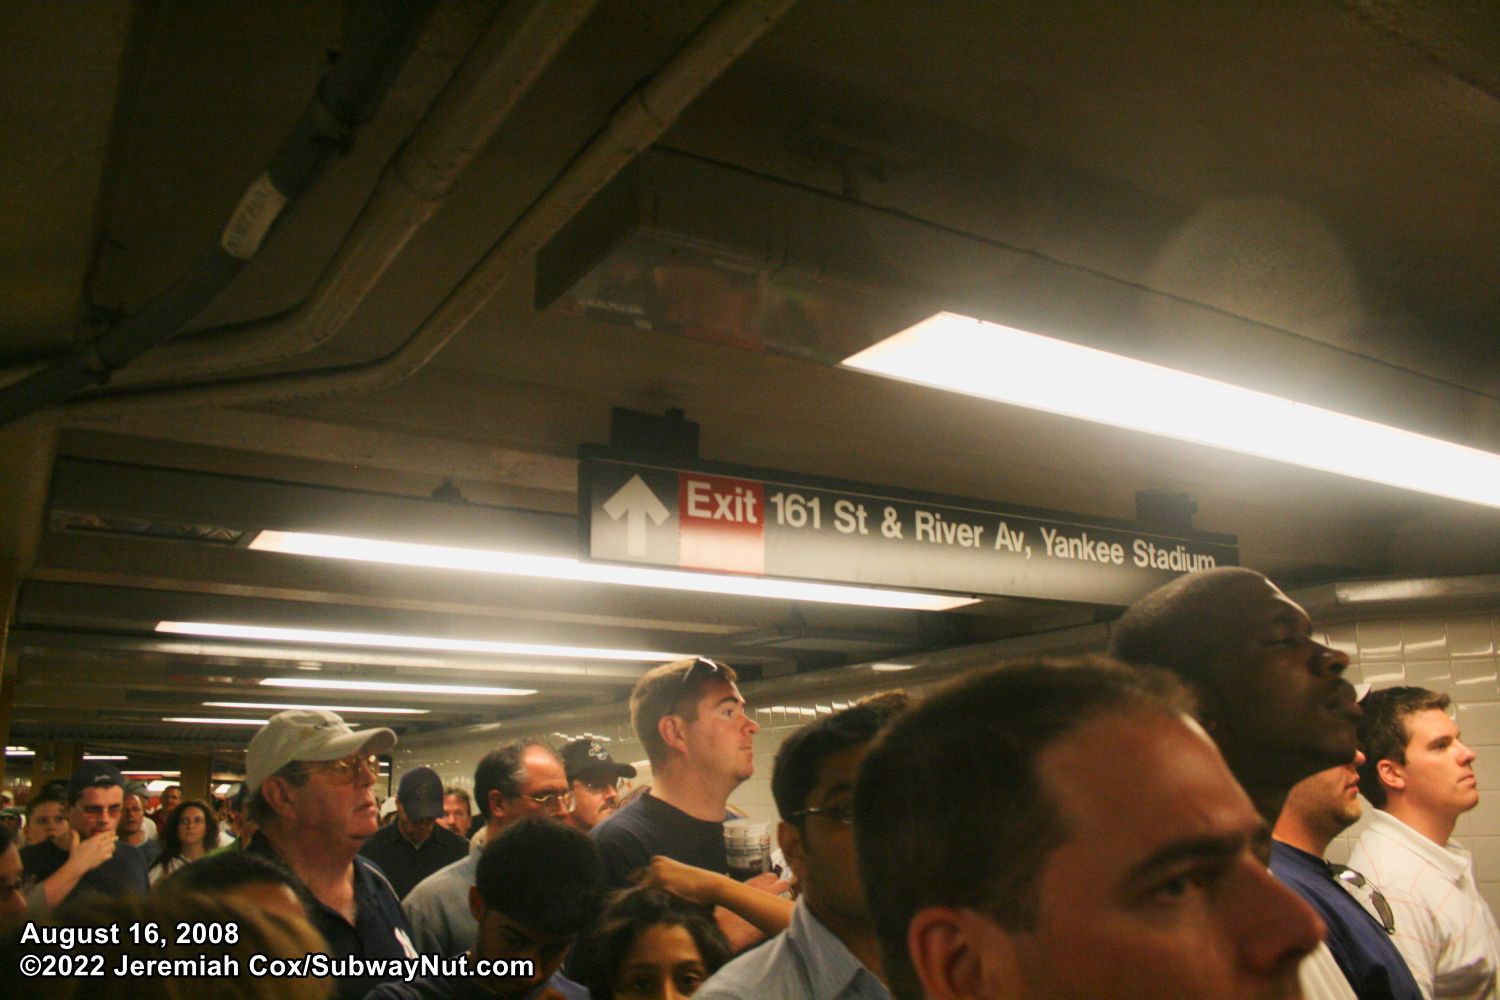 161st Street - Yankee Stadium Subway Station, Bronx, New Y…